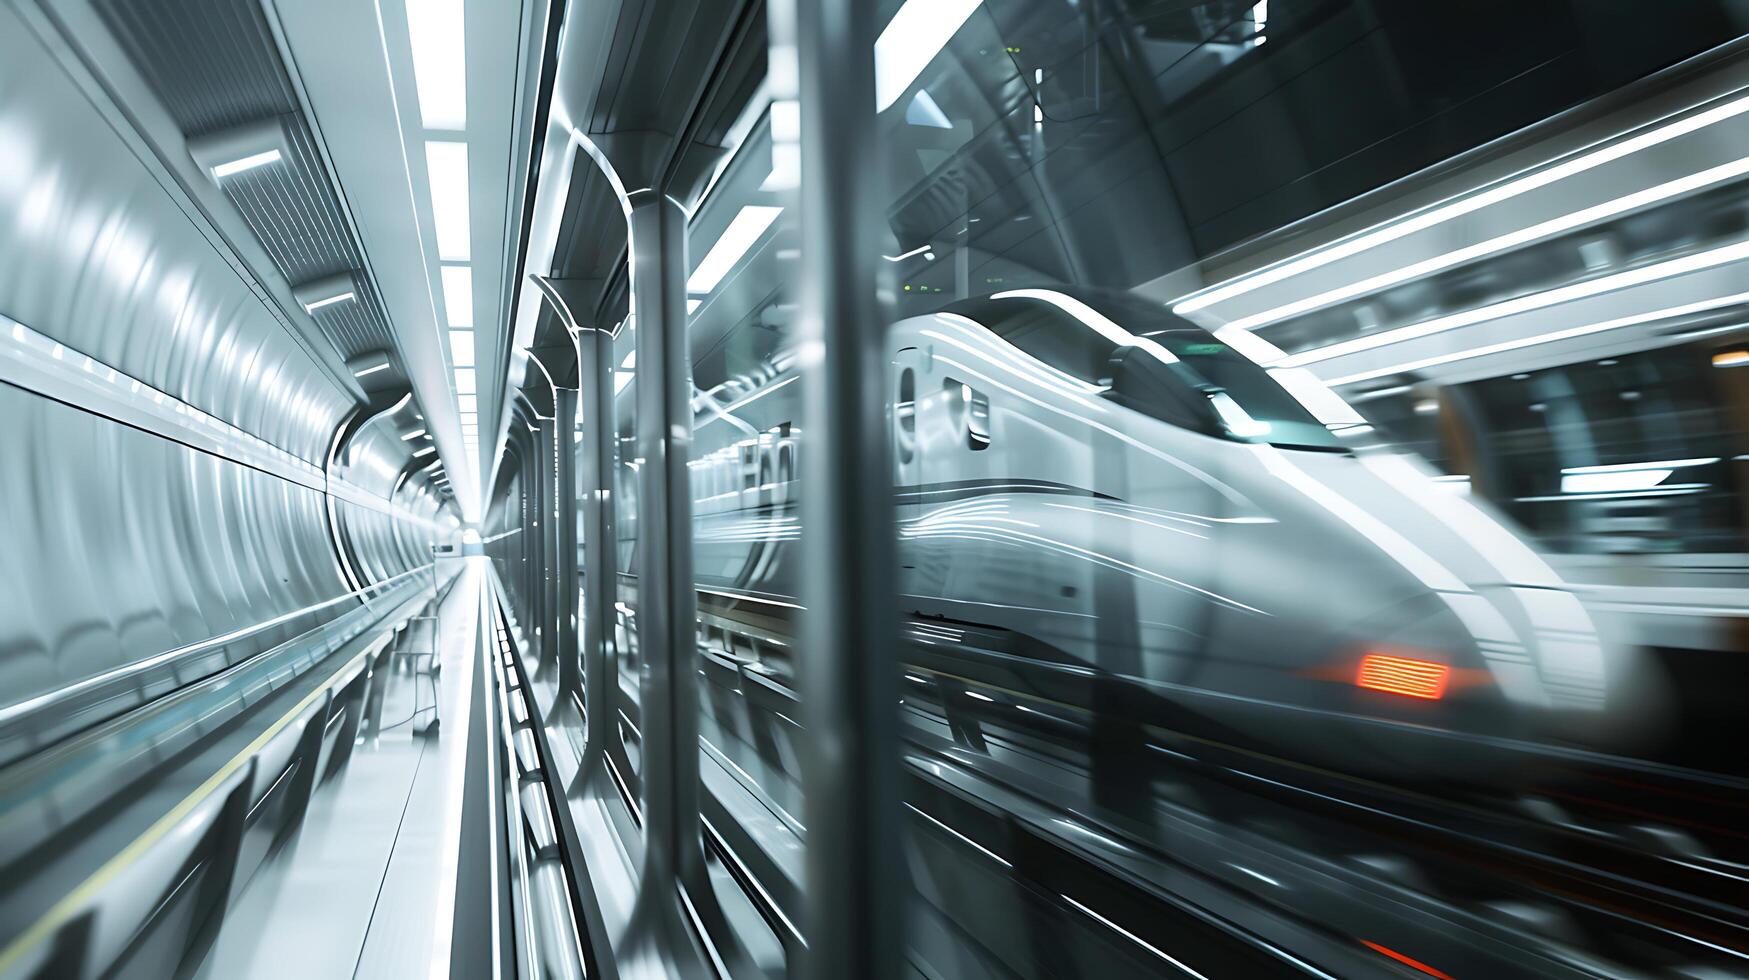 AI generated Sleek Silver Bullet Train Speeds Through Futuristic Station in CloseUp photo